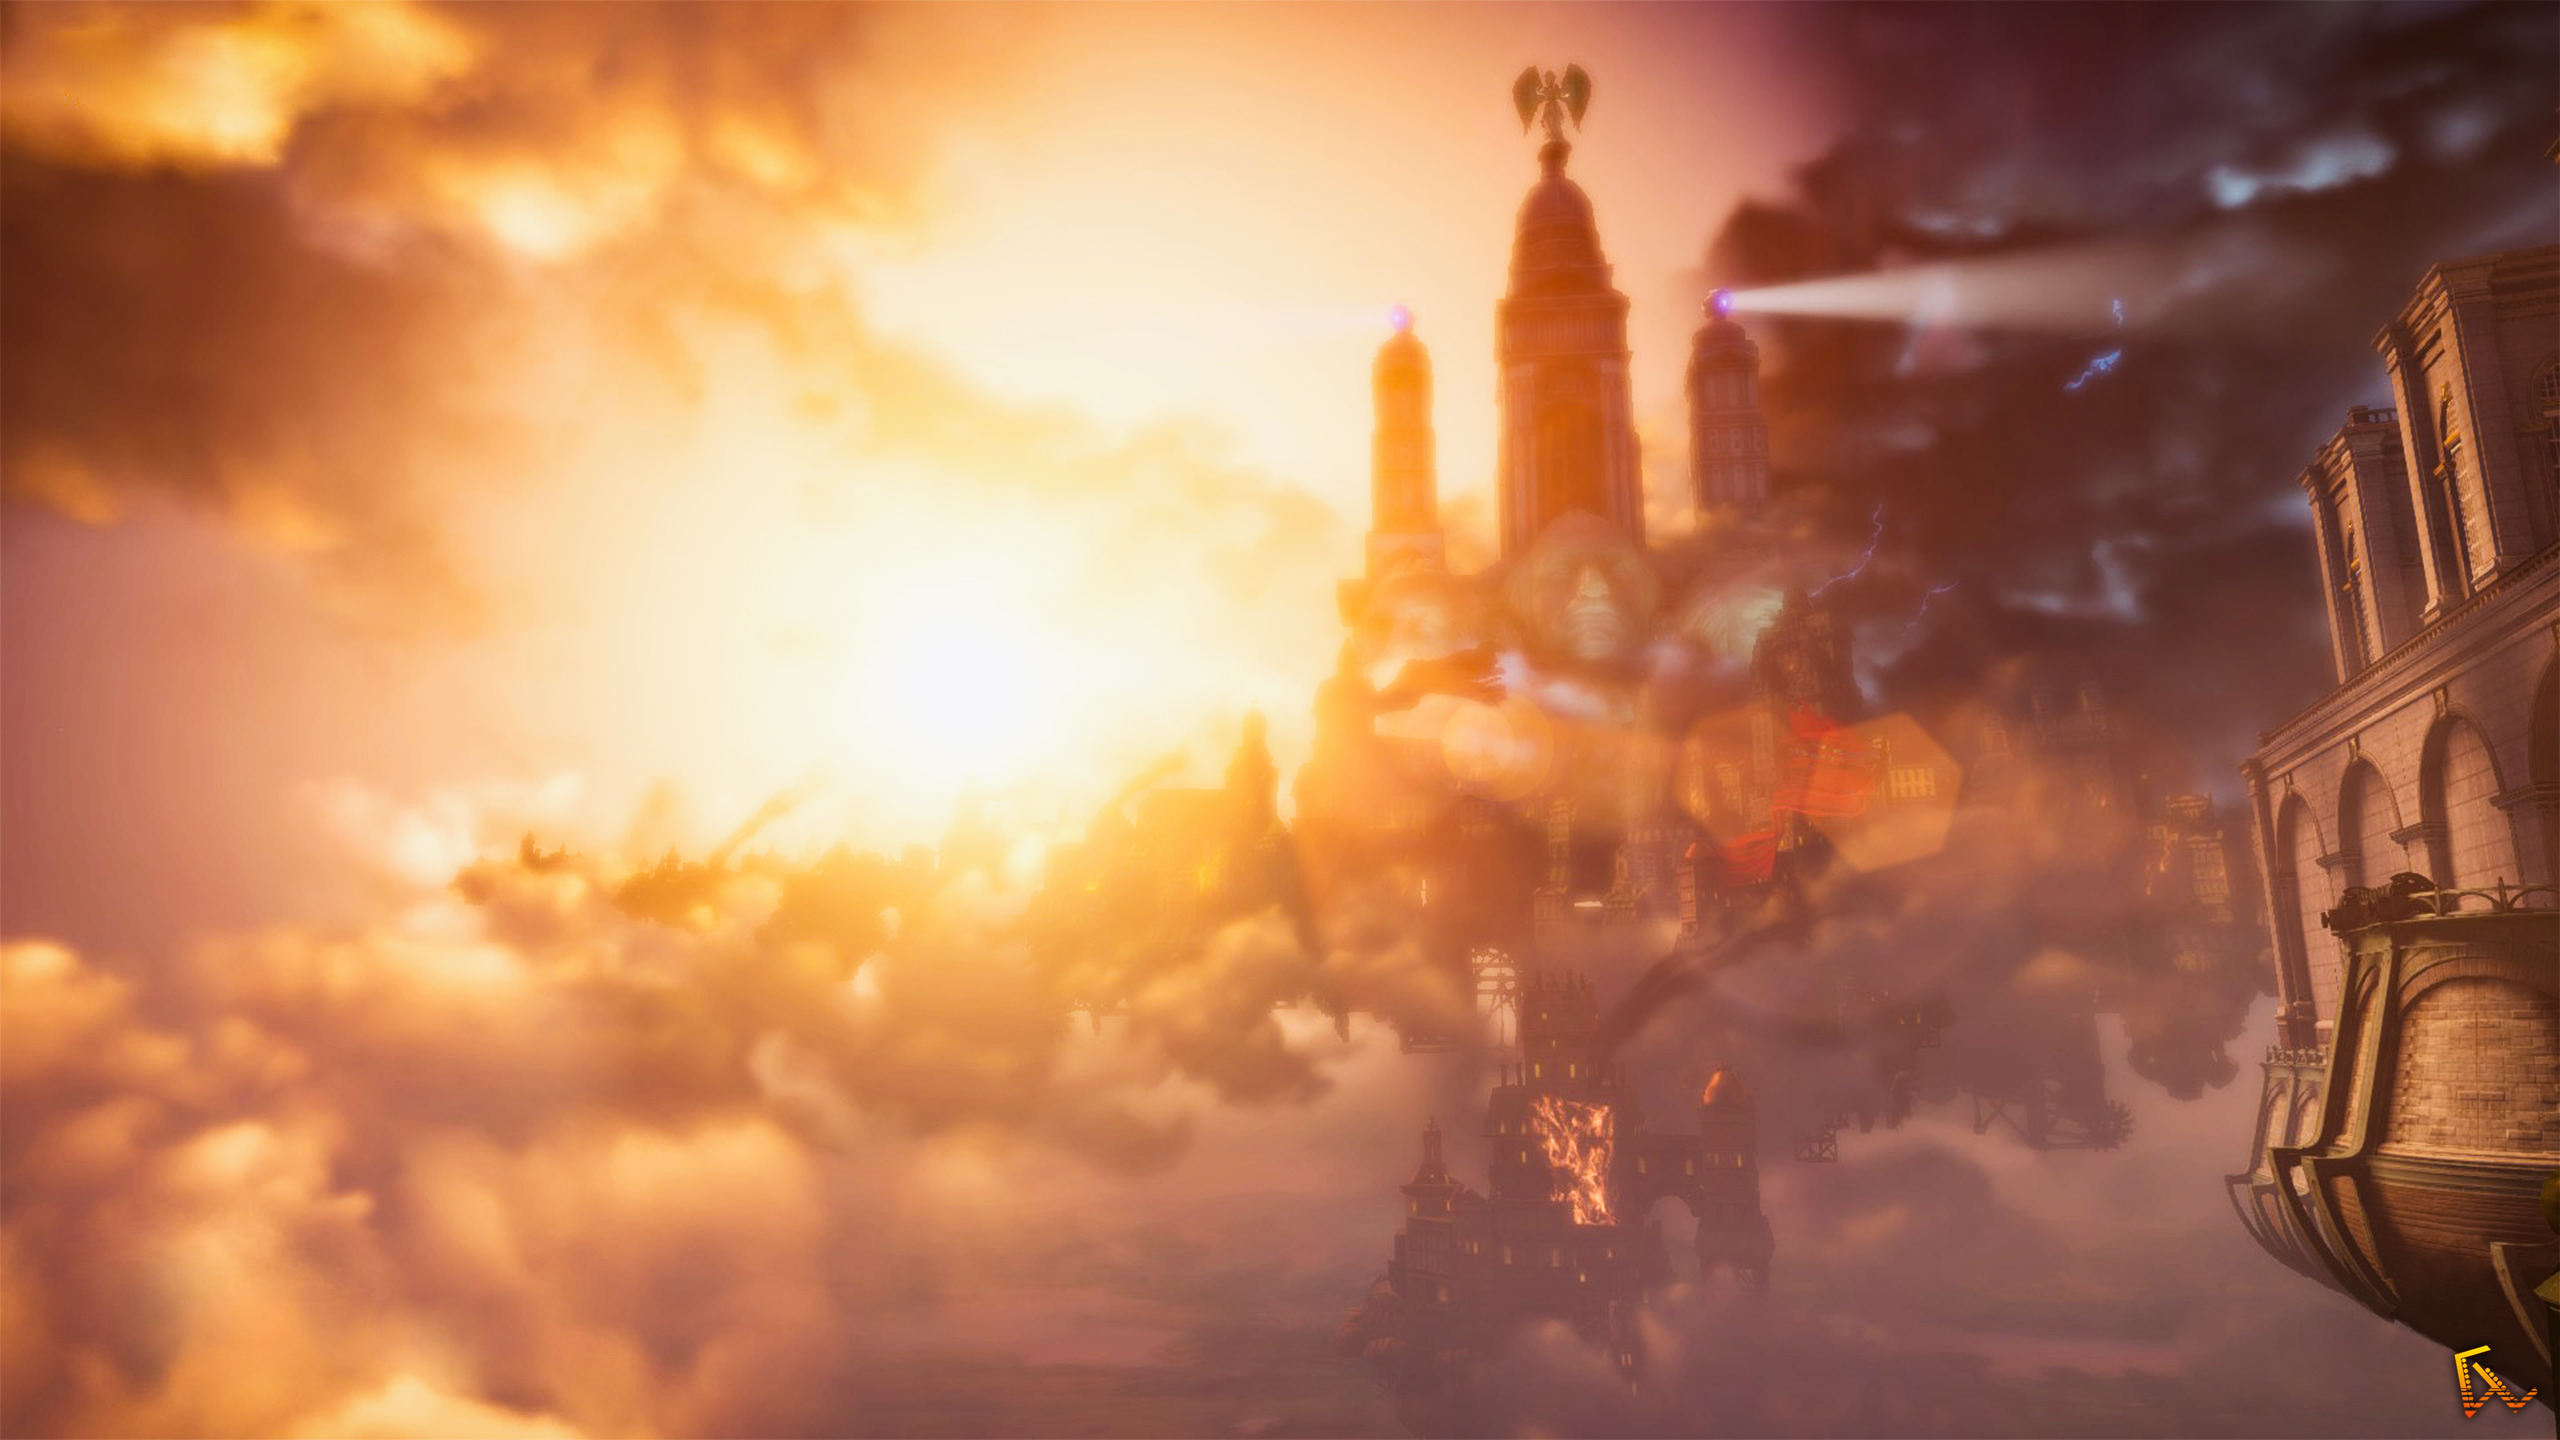 BioShock BioShock Infinite Columbia Video Games Screen Shot Clouds Cityscape Landscape Sun Rays Phot 2560x1440